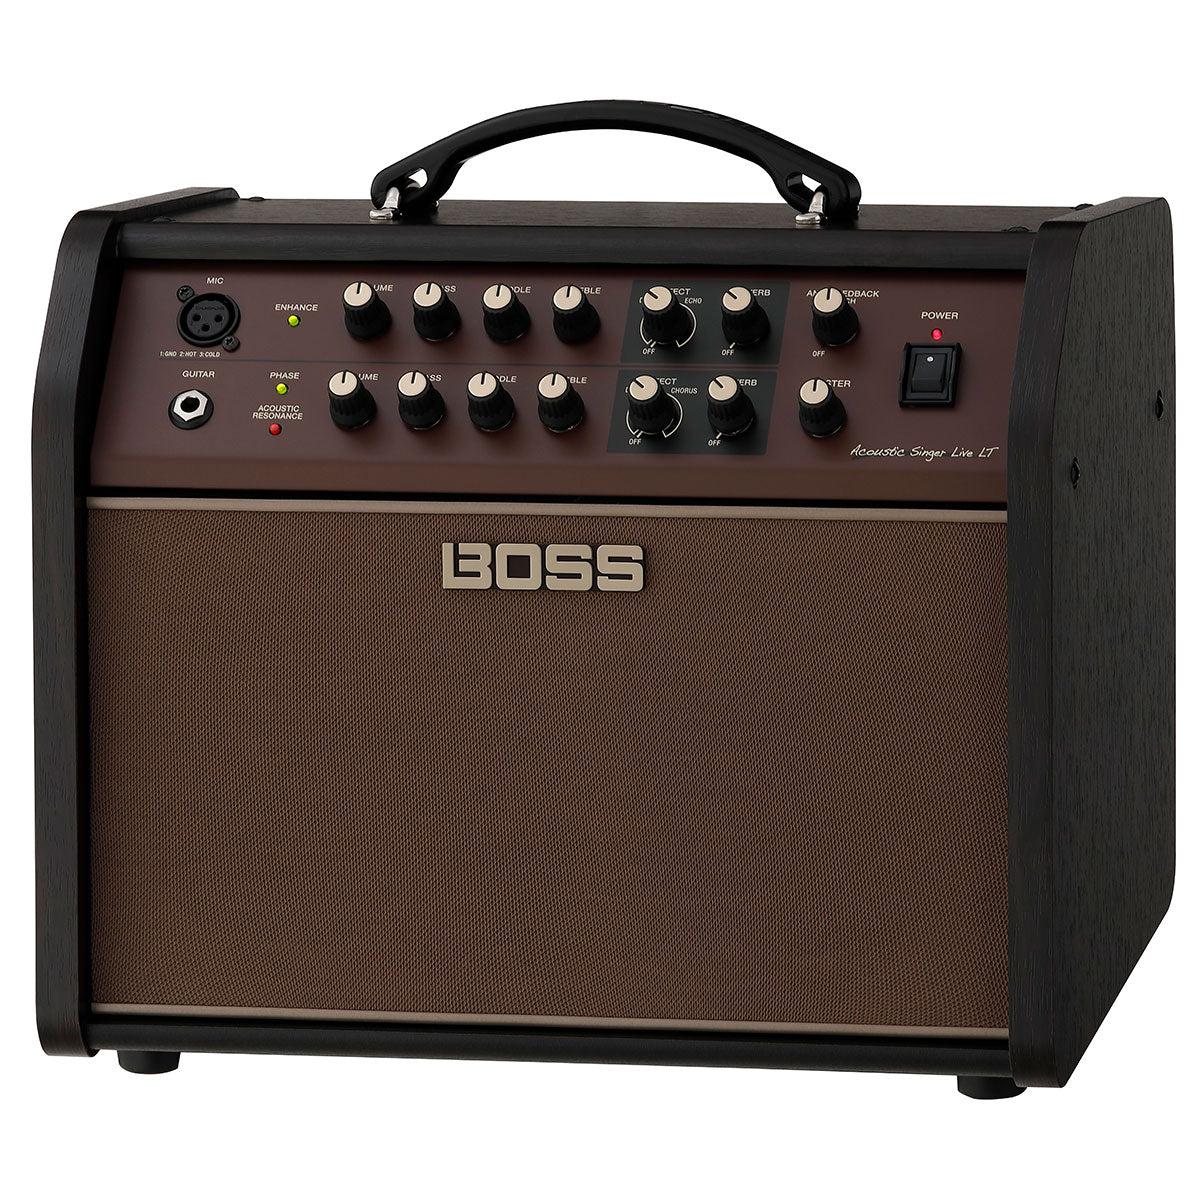 Boss Acoustic Singer Live LT Acoustic Guitar Amplifier PERFORMER PAK